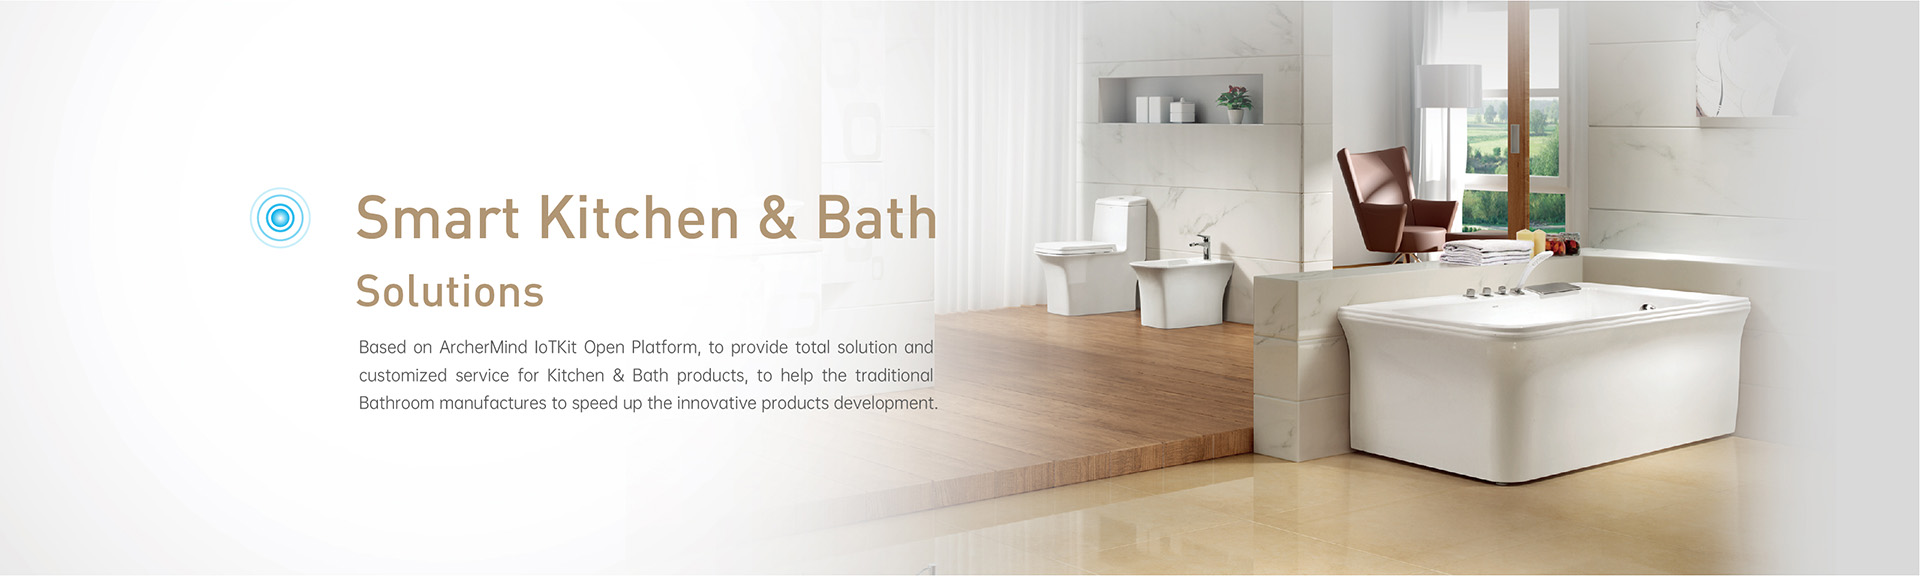 Smart Home Products, Kitchen & Bath